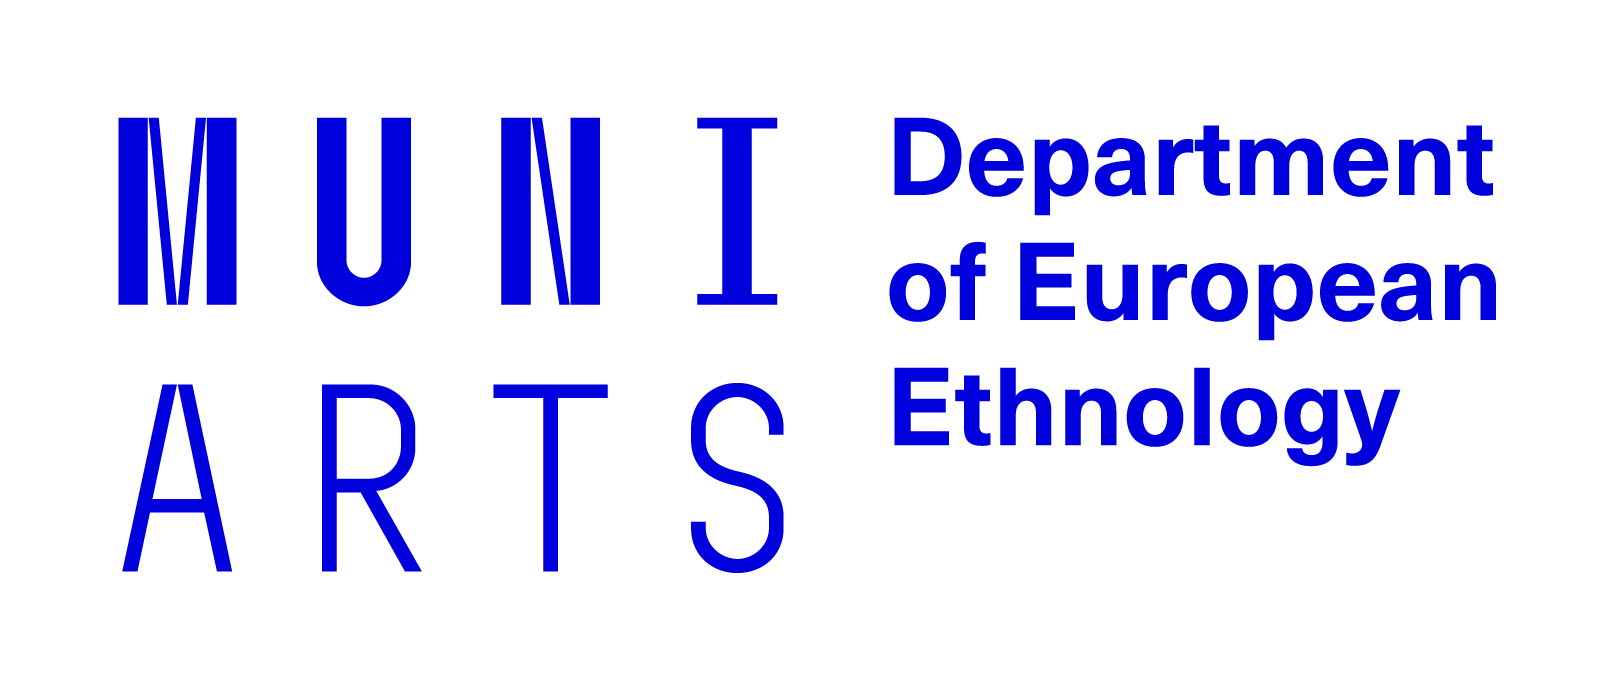 Department of European Ethnology